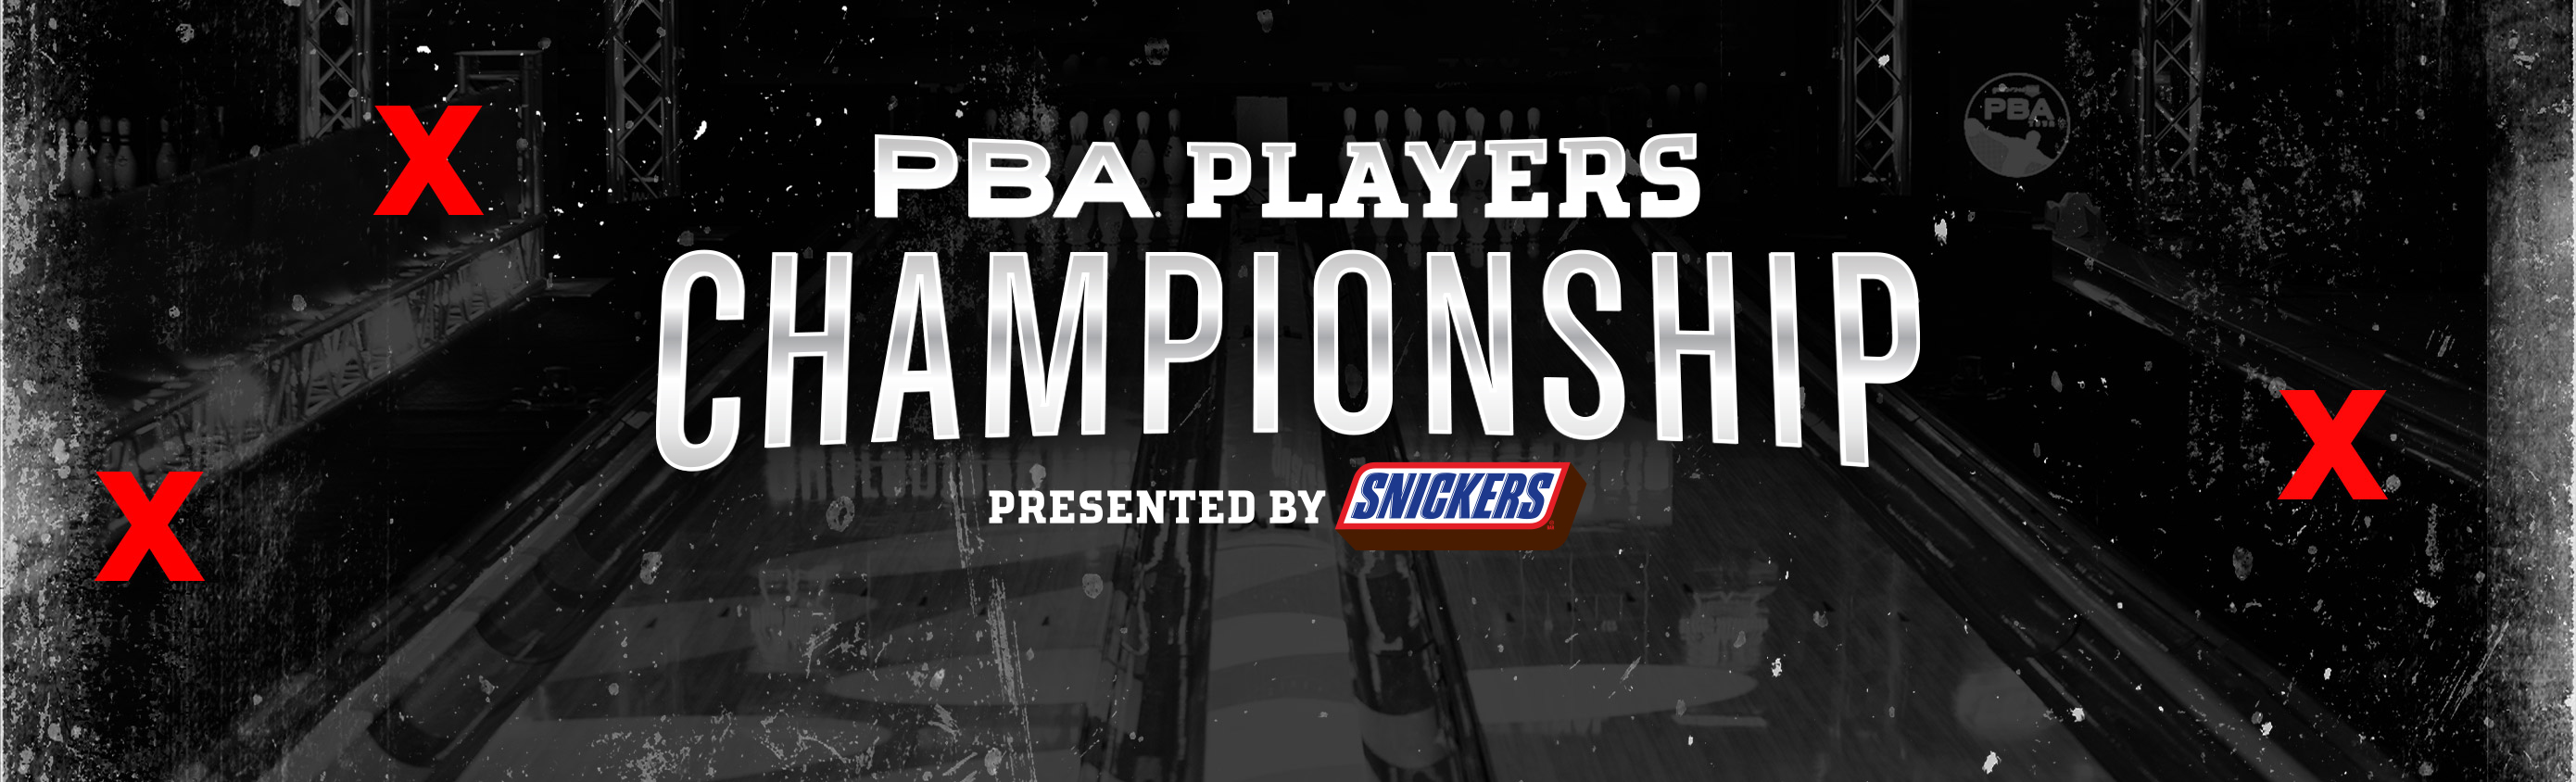 PBA Players Championship PBA